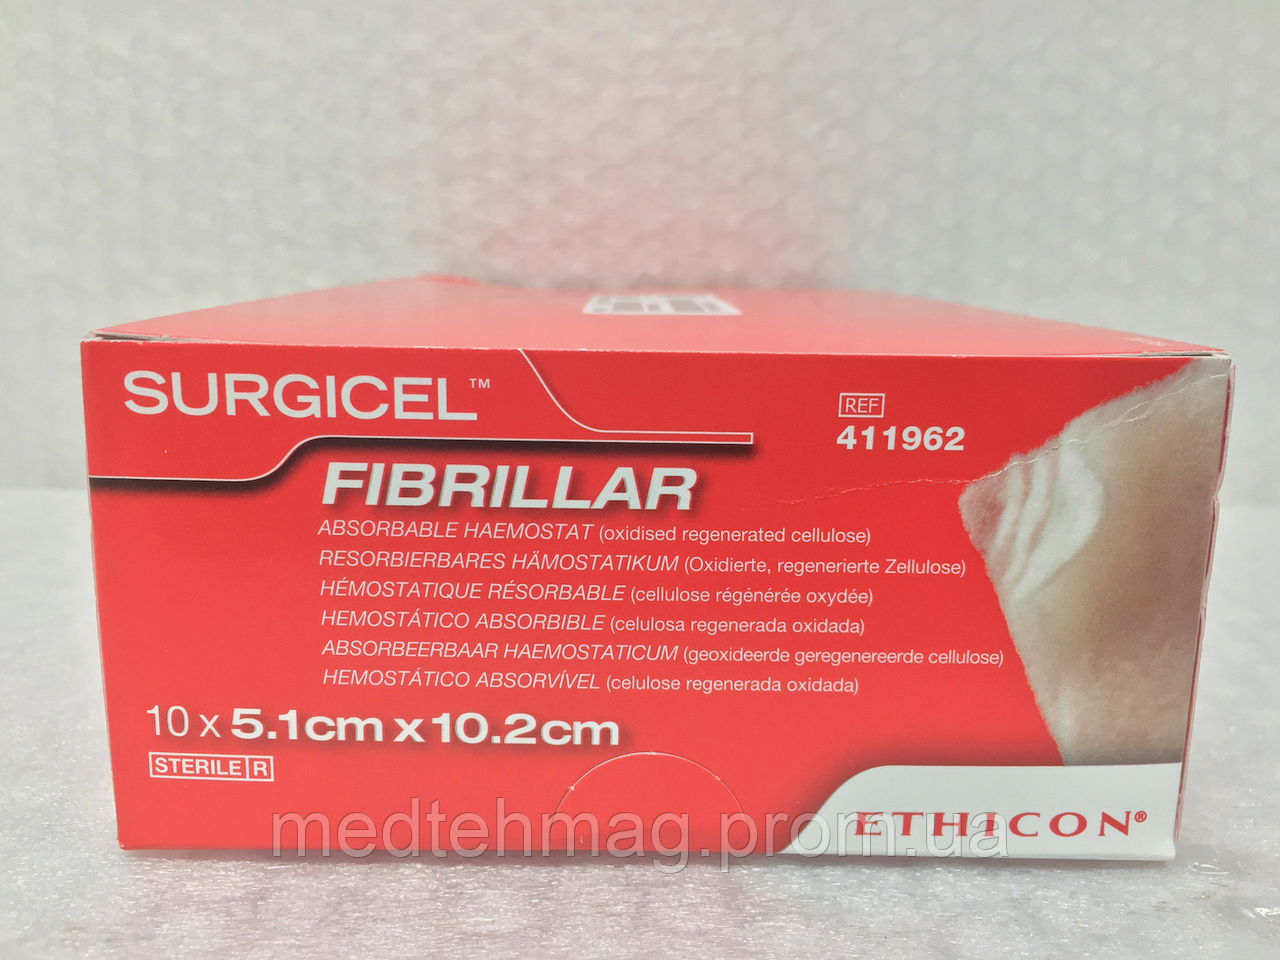 Гемостатик Surgicel Fibrillar (Серджисел Фібріллар) 5,1см х 10,2см 10 шт./упаковка, Ethicon 411962